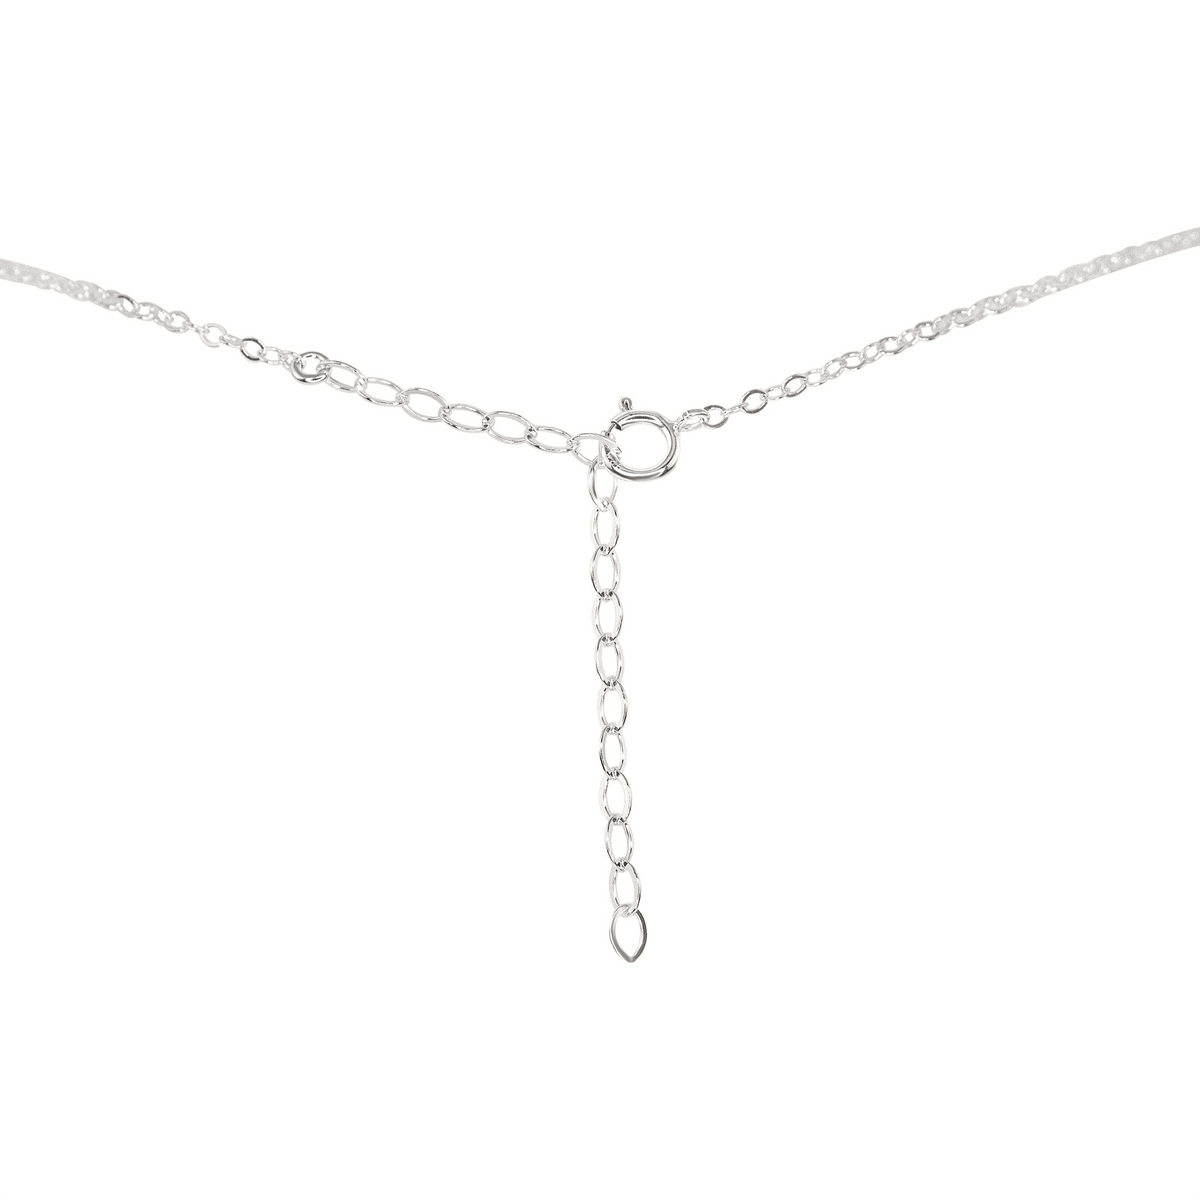 Tiny Raw Labradorite Pendant Necklace - Tiny Raw Labradorite Pendant Necklace - Sterling Silver / Cable - Luna Tide Handmade Crystal Jewellery